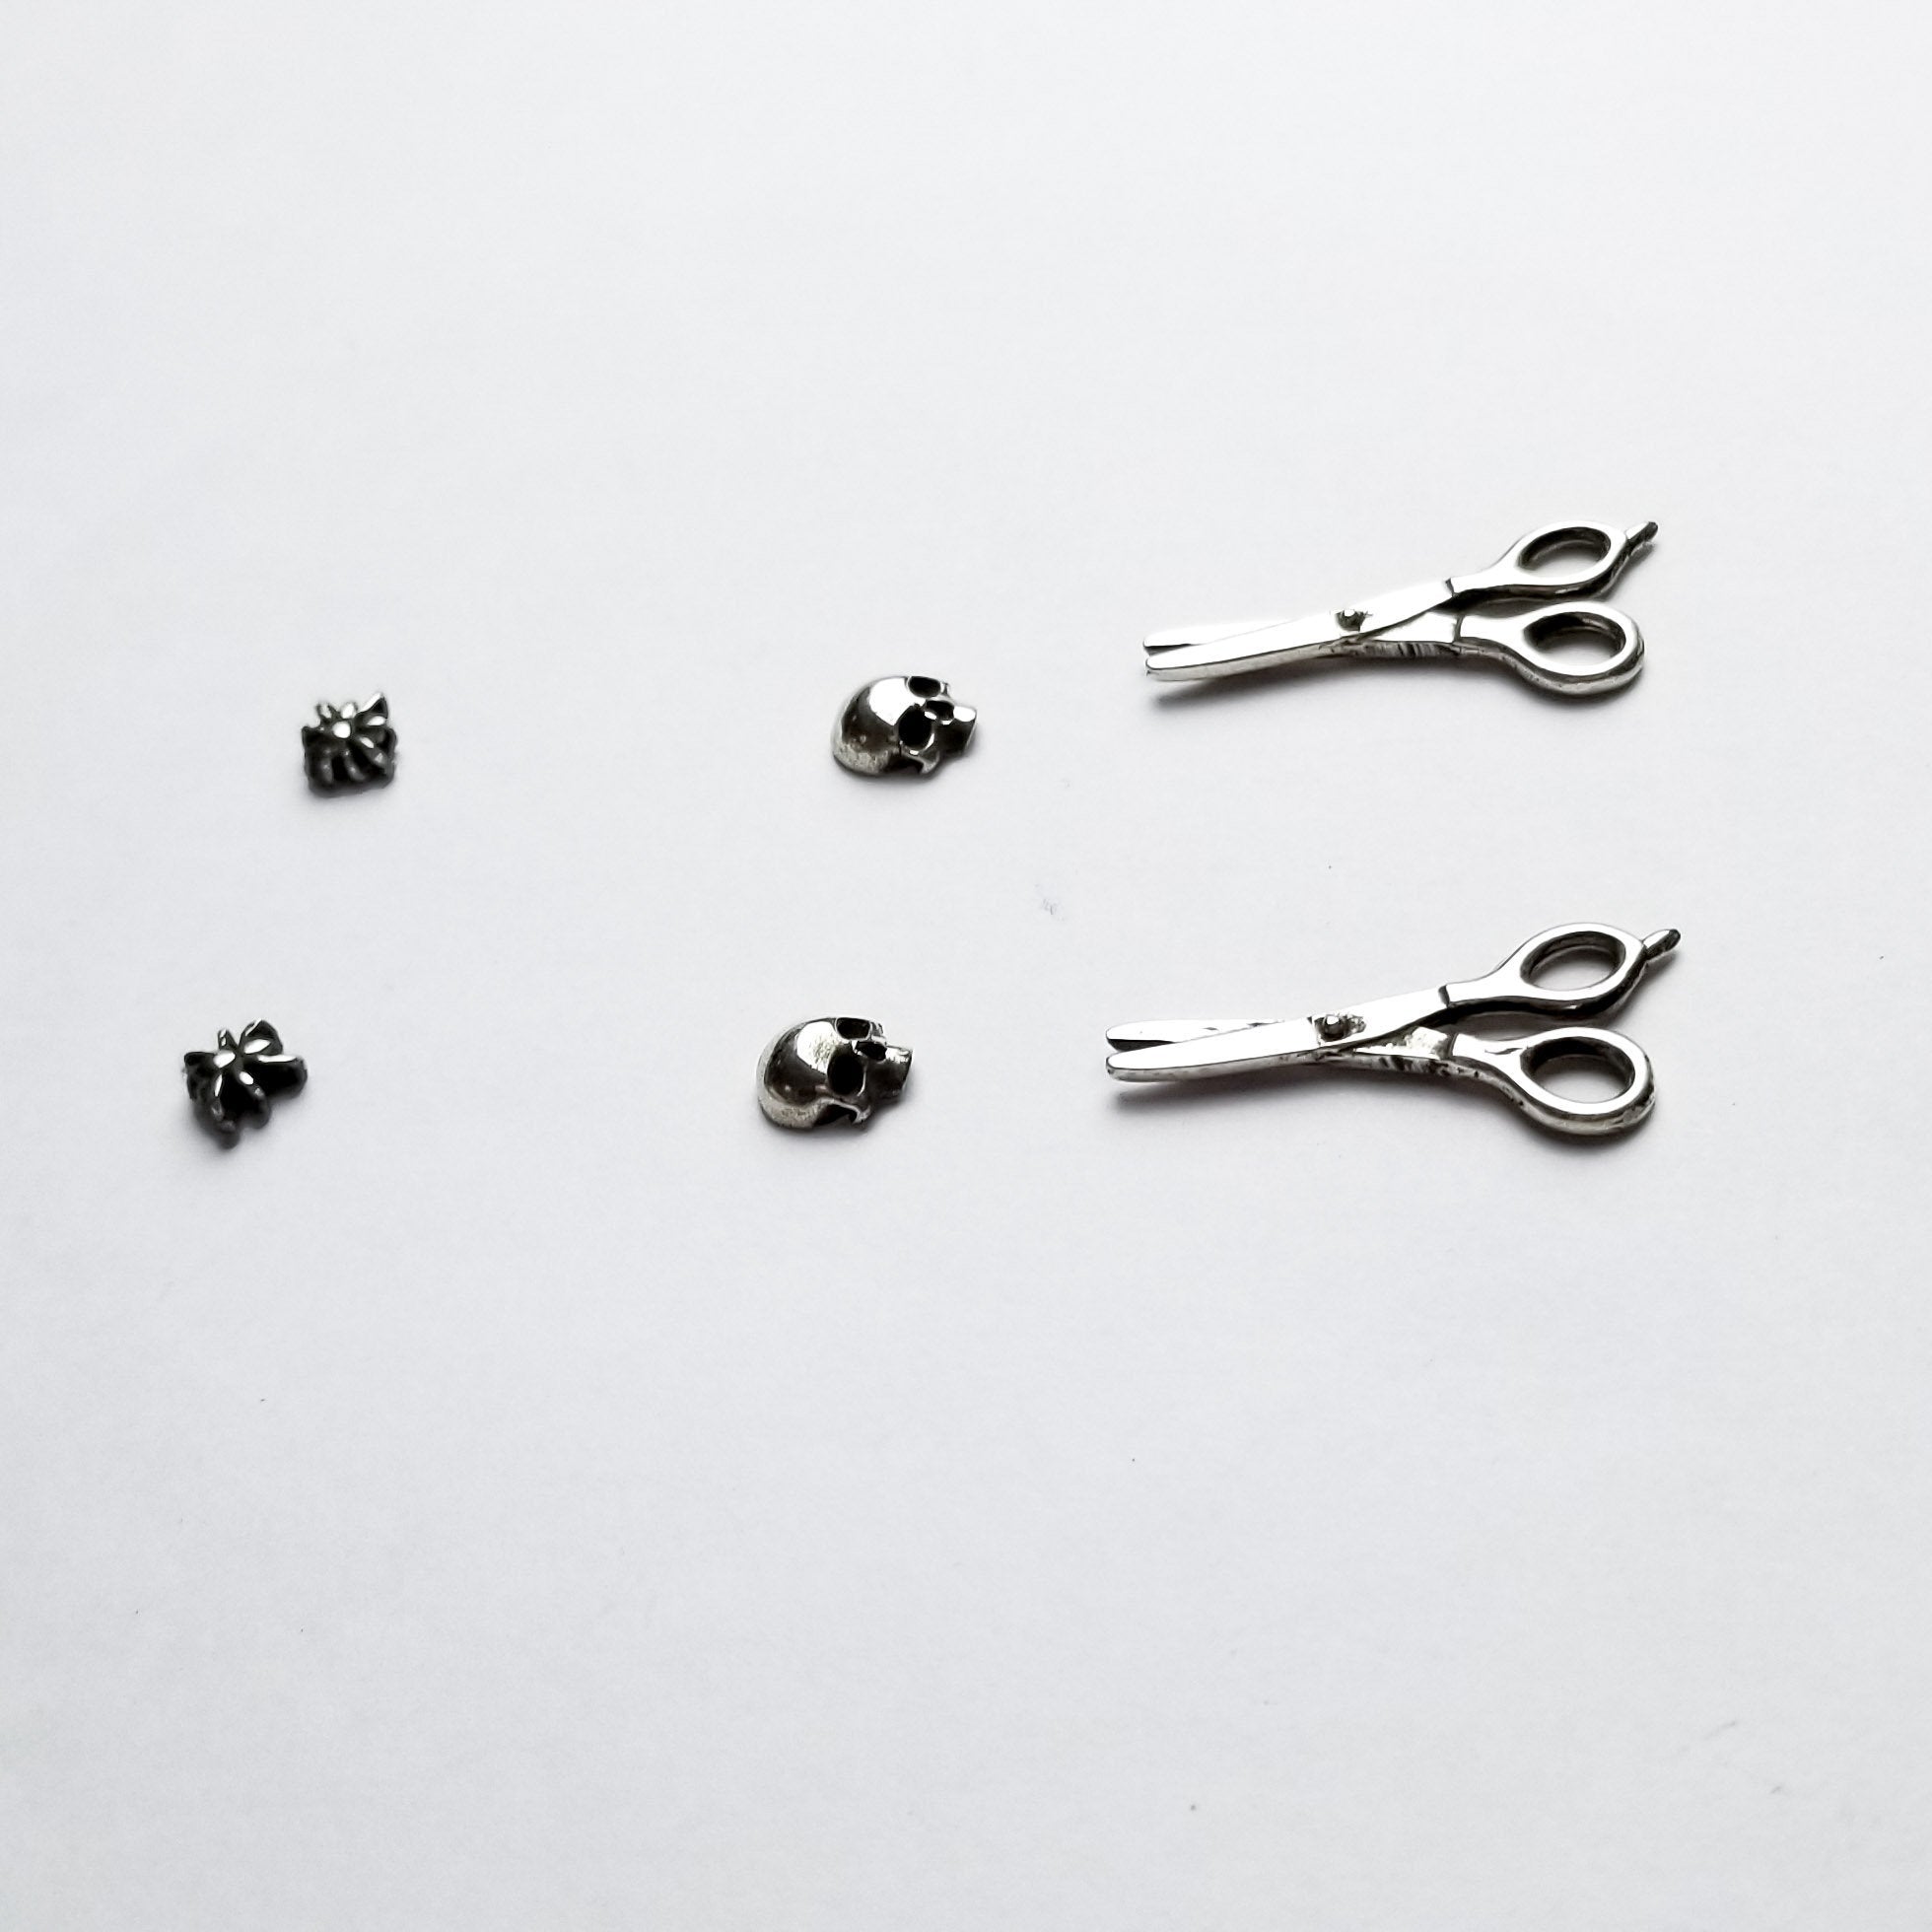 Set of 3 Pairs of Earrings #2 - Spider, Scissors & Skull Studs - Inchoo Bijoux